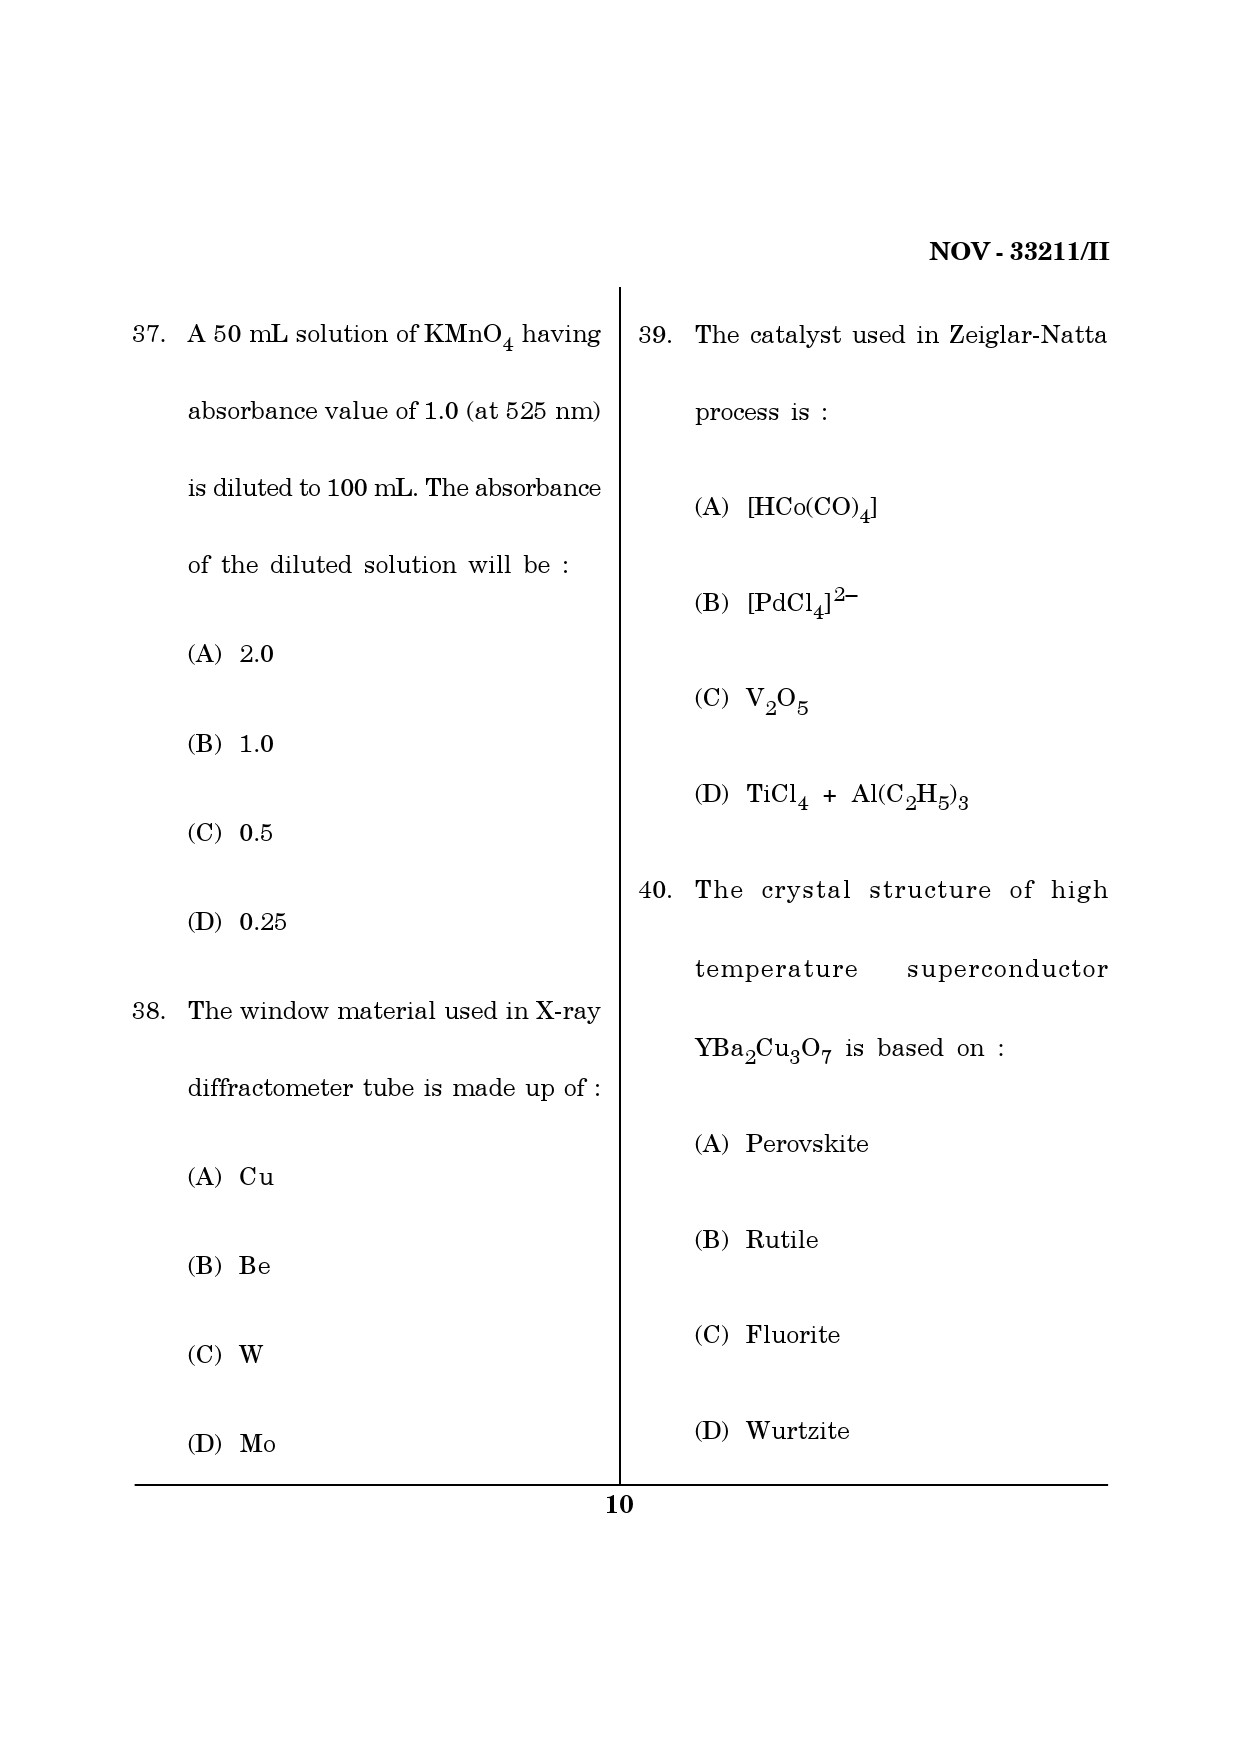 Maharashtra SET Chemical Sciences Question Paper II November 2011 10